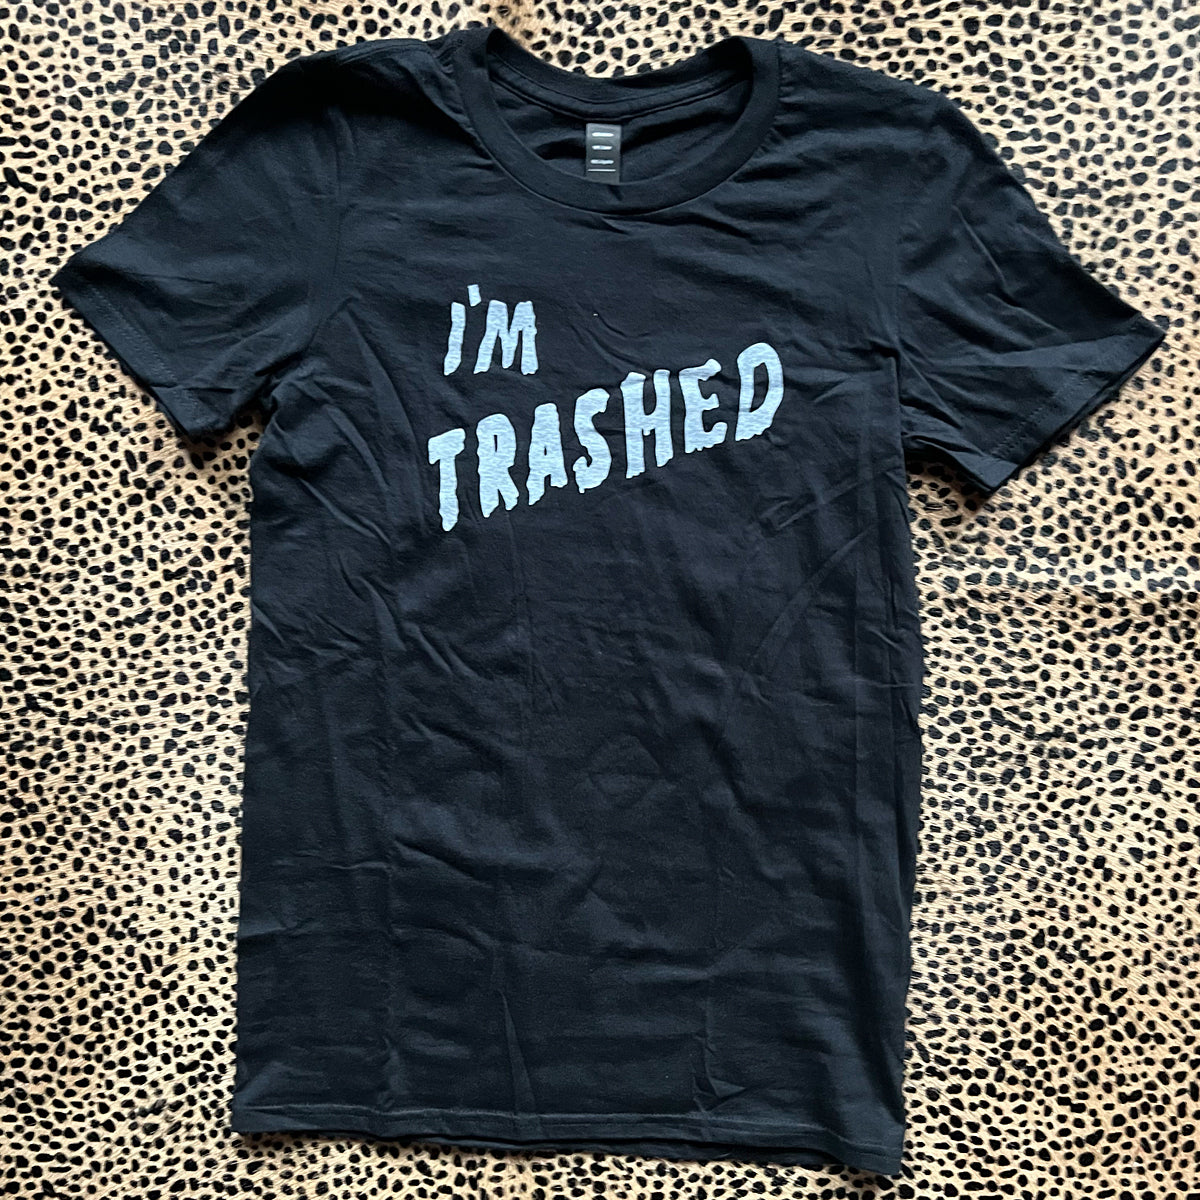 The Trash Bags - I'm Trashed T